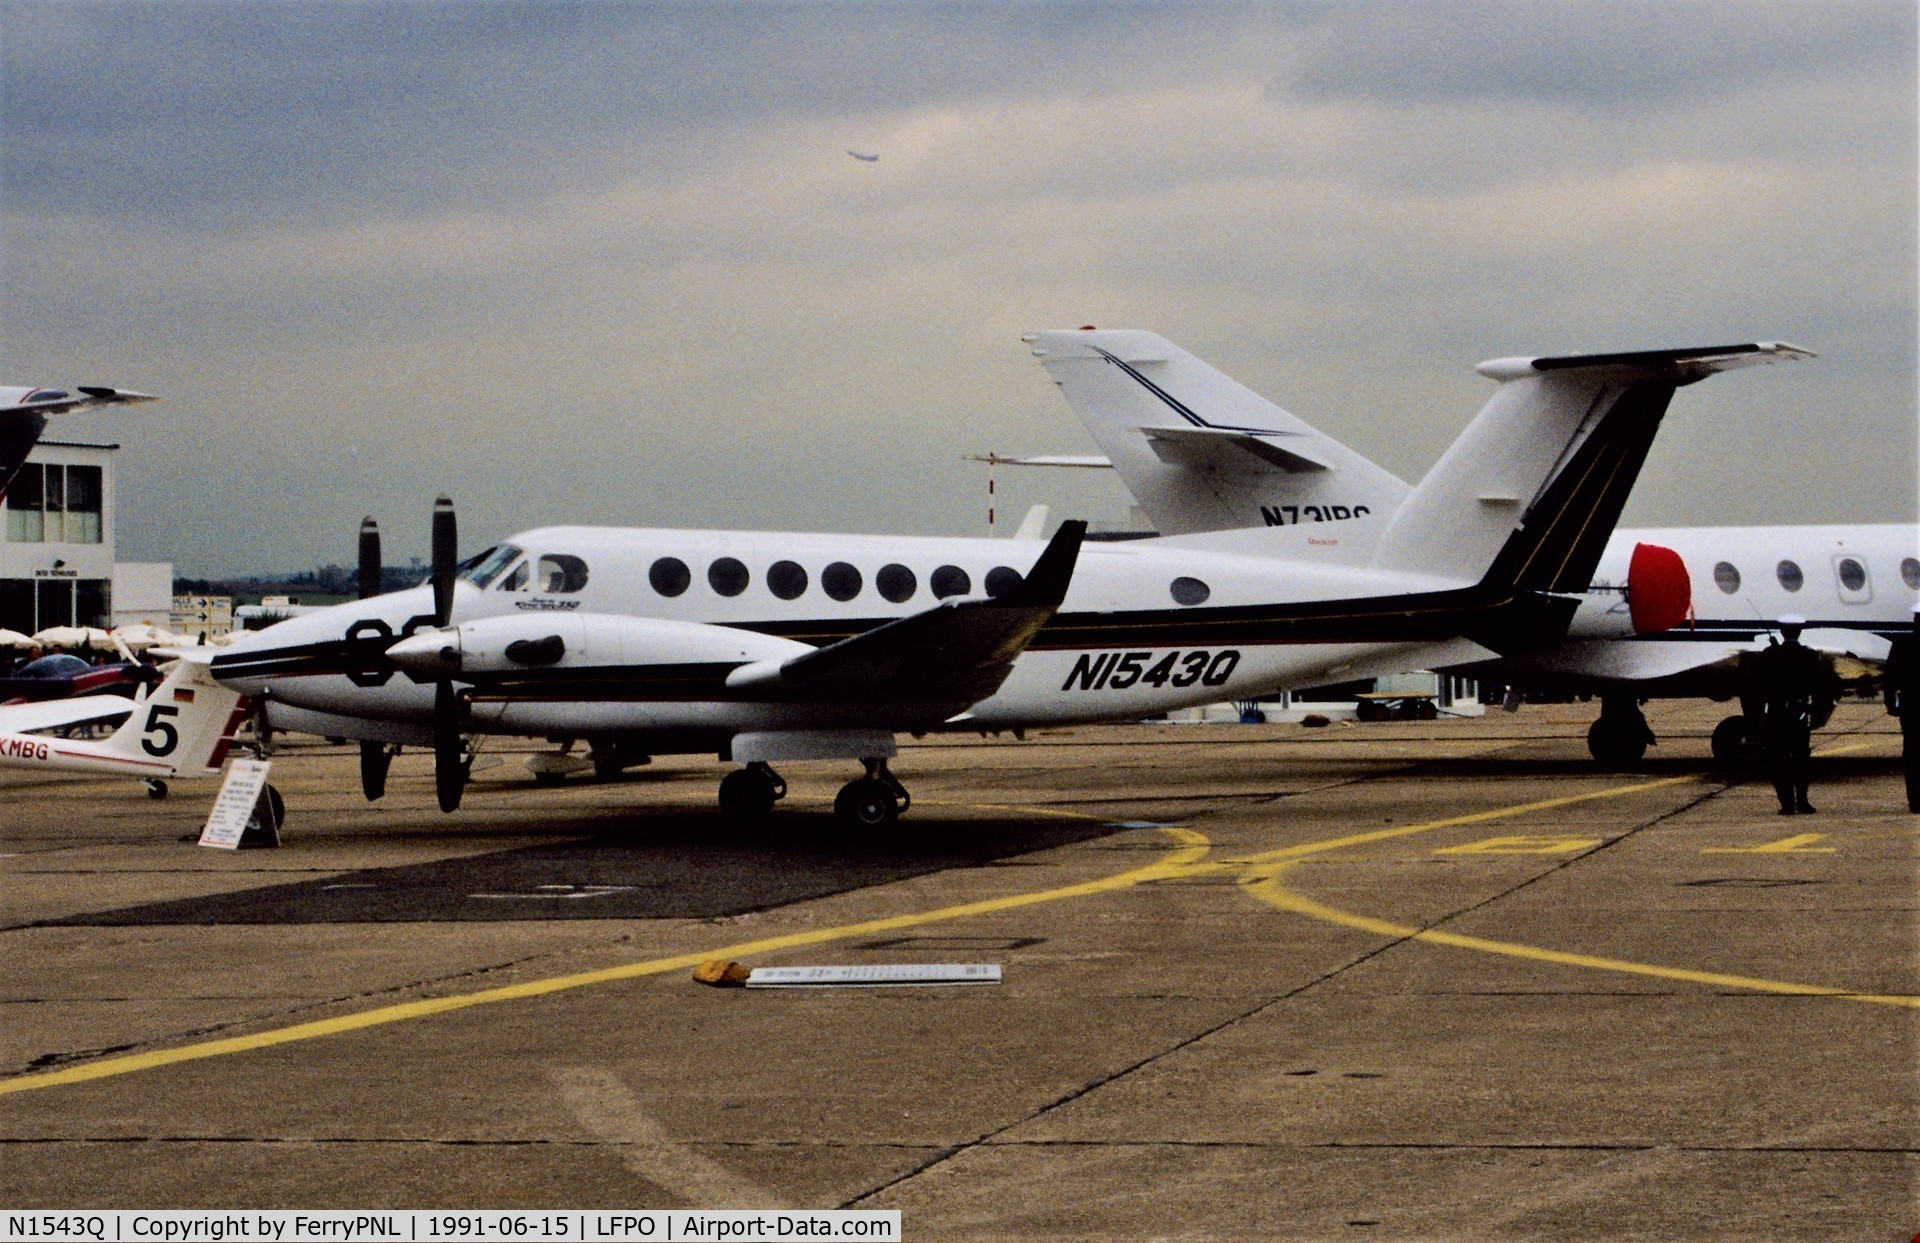 N1543Q, 1990 Beech Super King Air 350 C/N FL-23, Transair USA Inc Be350 on display